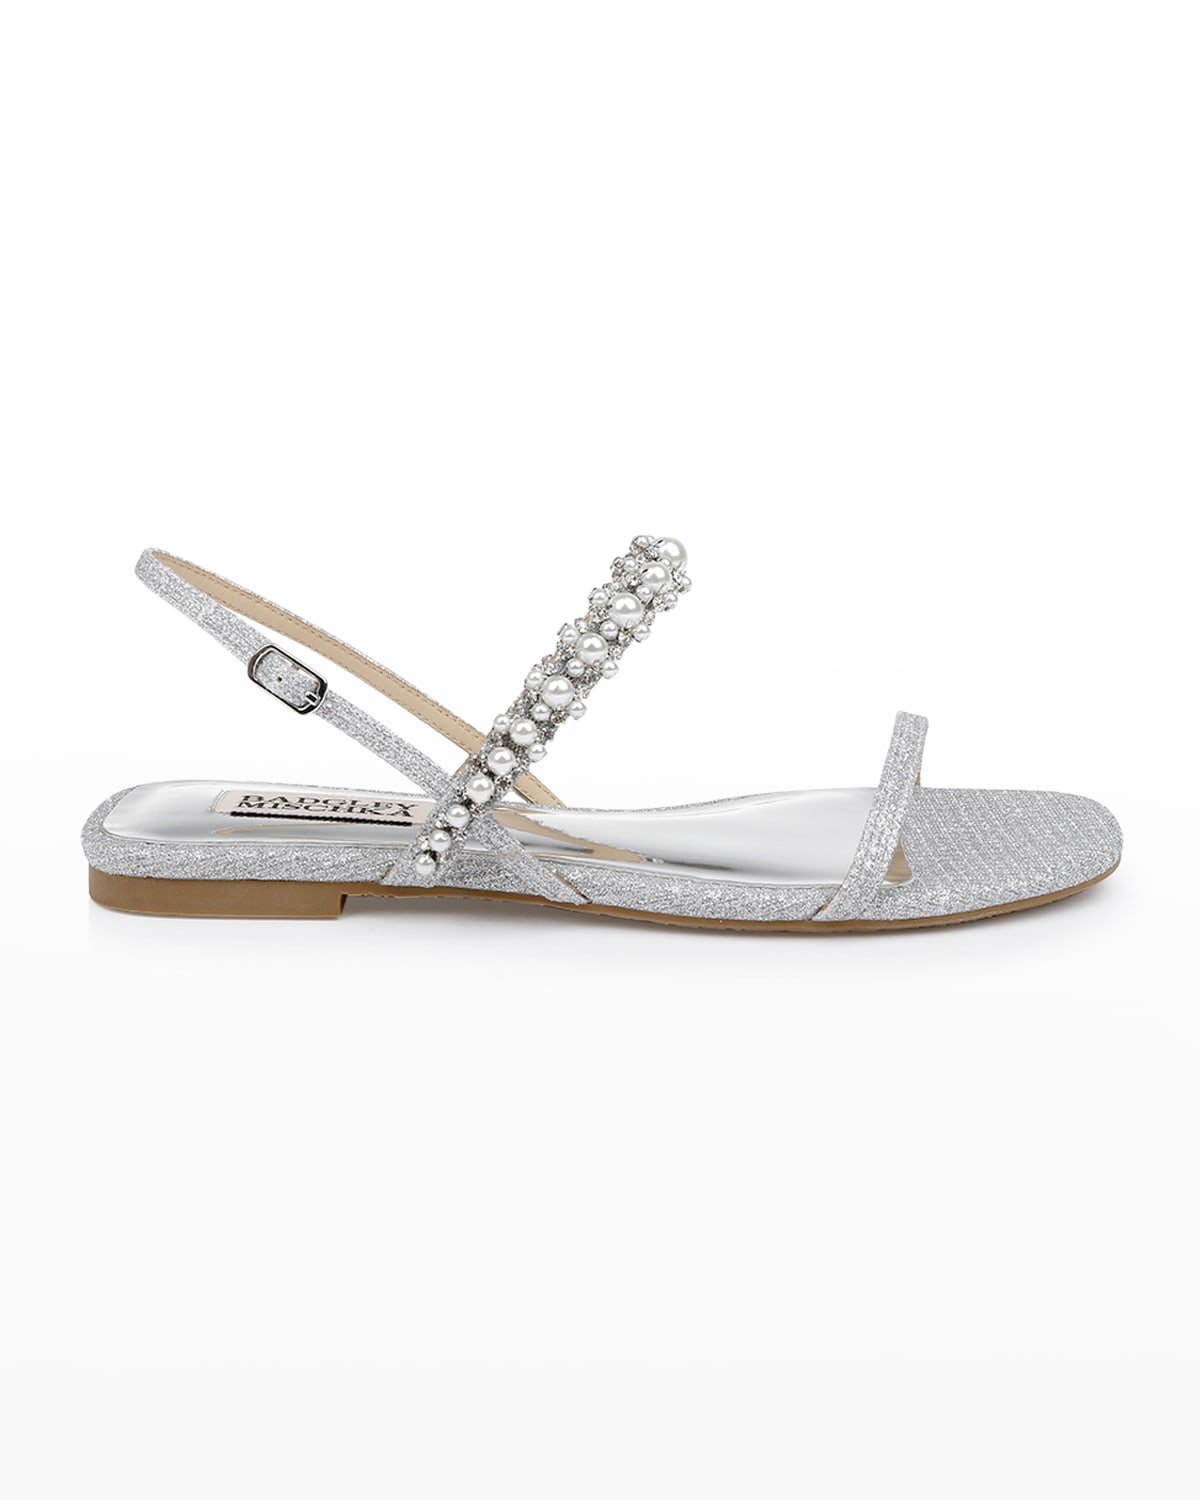 Badgley Mischka Natalee Crystal Glitter Slingback Sandals